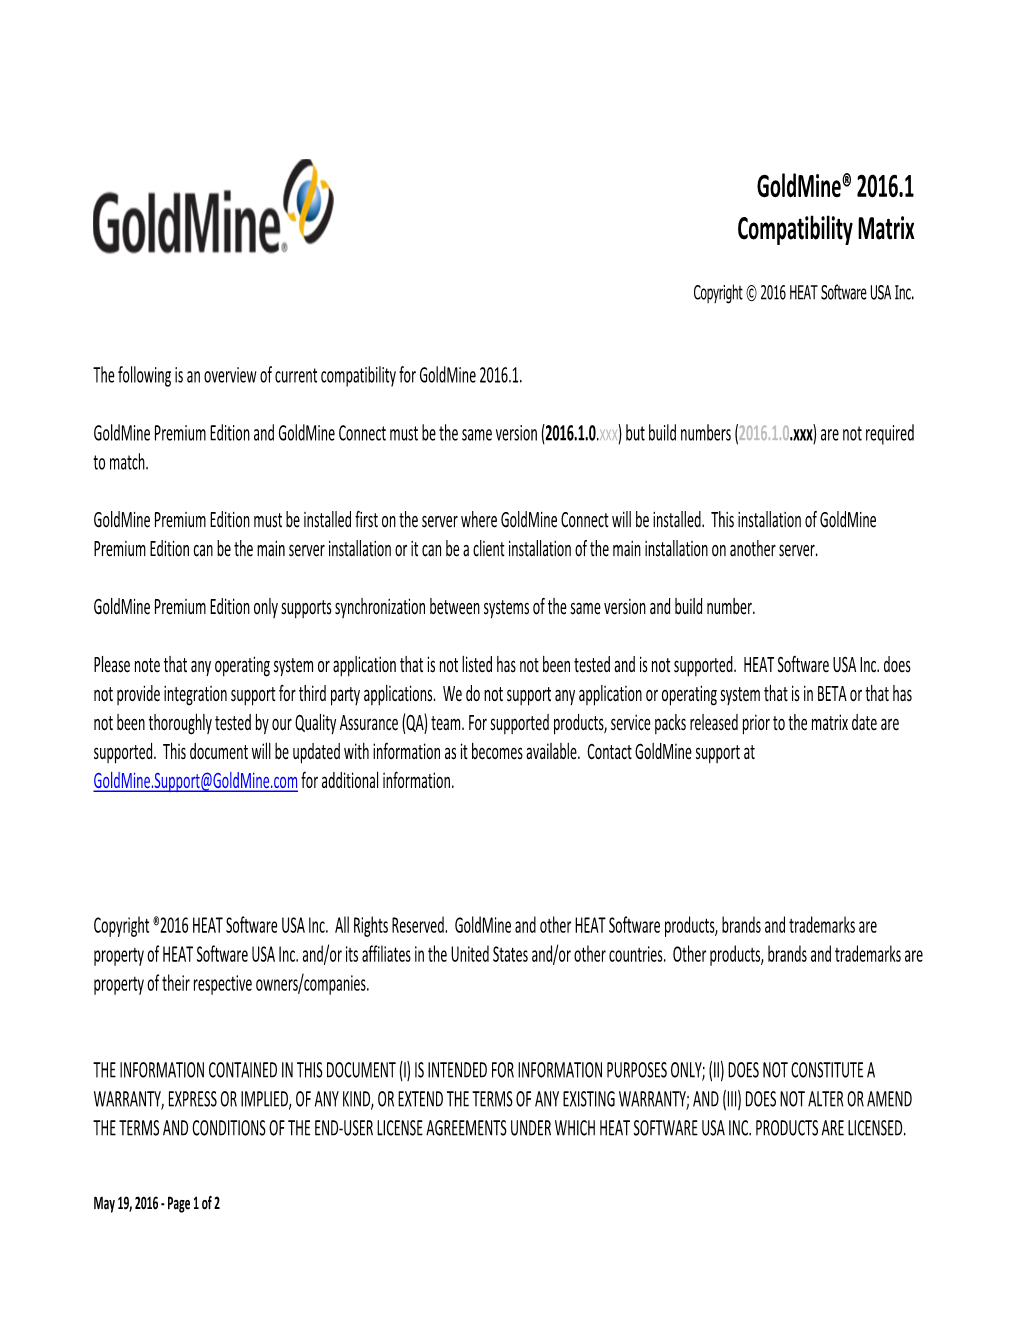 Goldmine® 2016.1 Compatibility Matrix